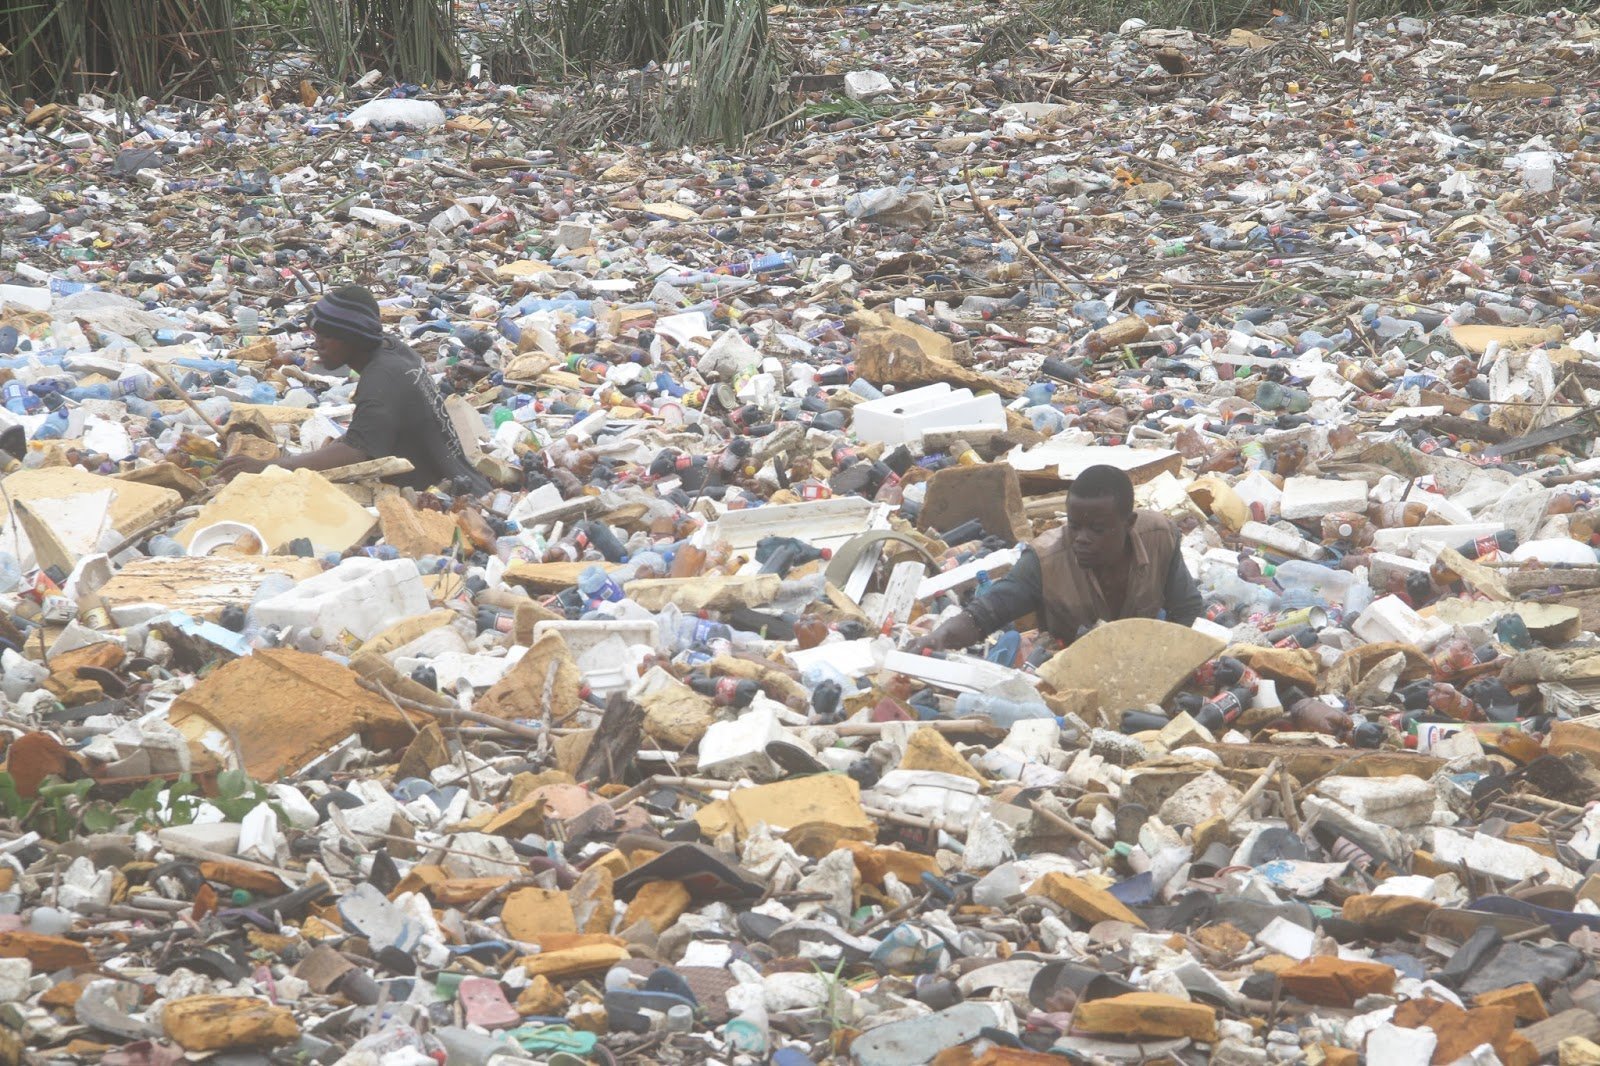 Tanzania clean up campaign